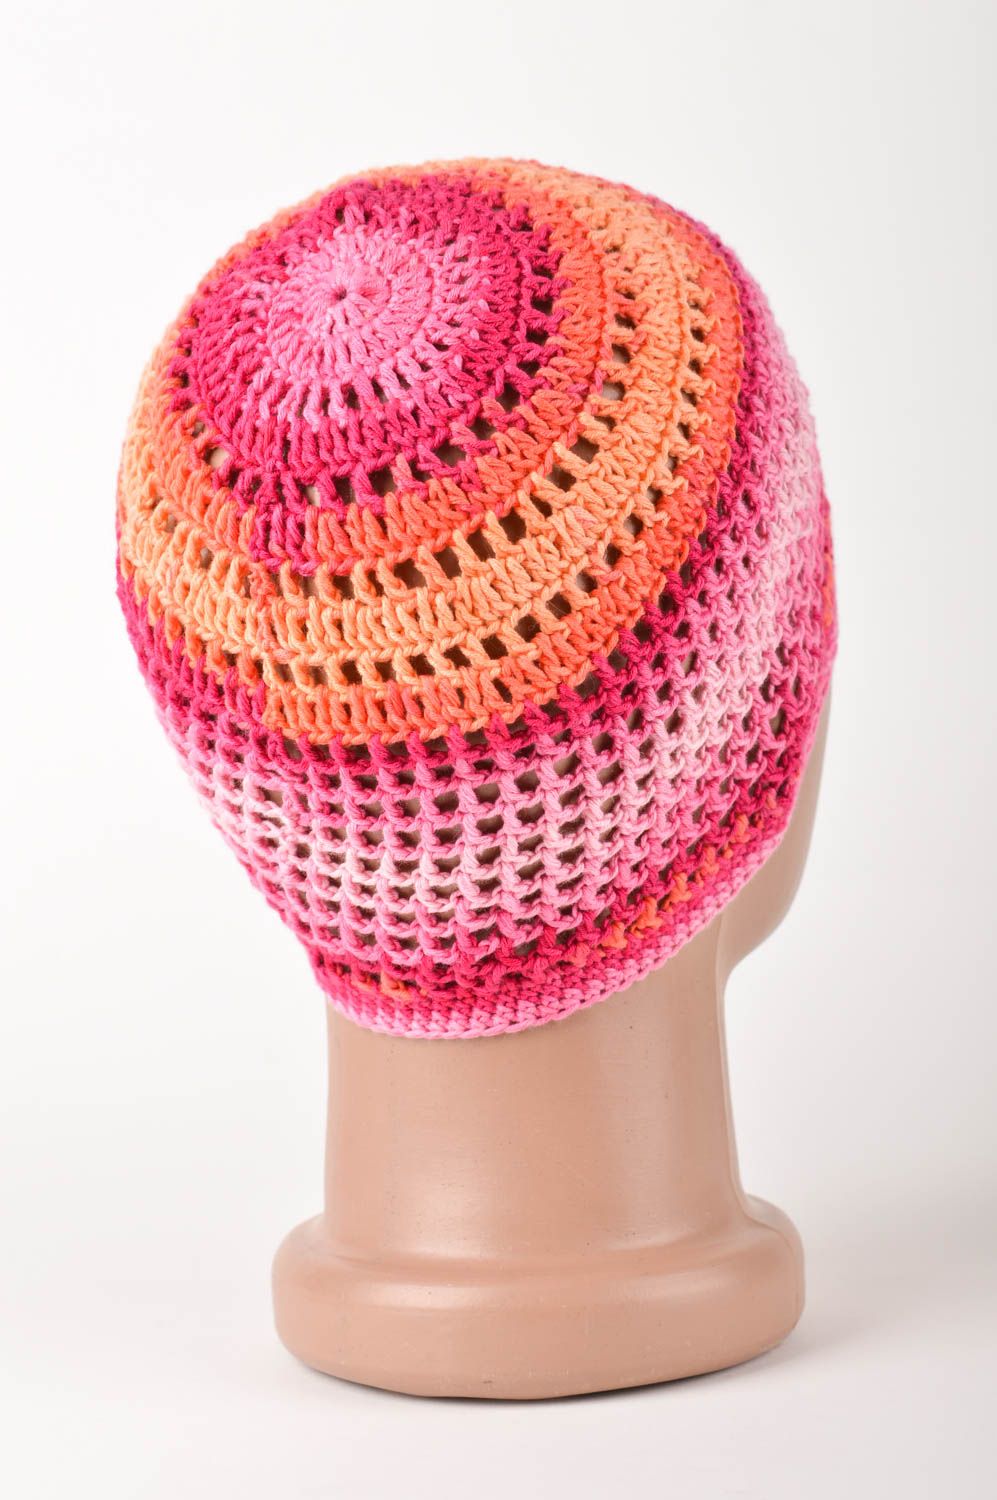 Crochet hat for babies handmade crochet hat kids accessories gifts for children photo 5